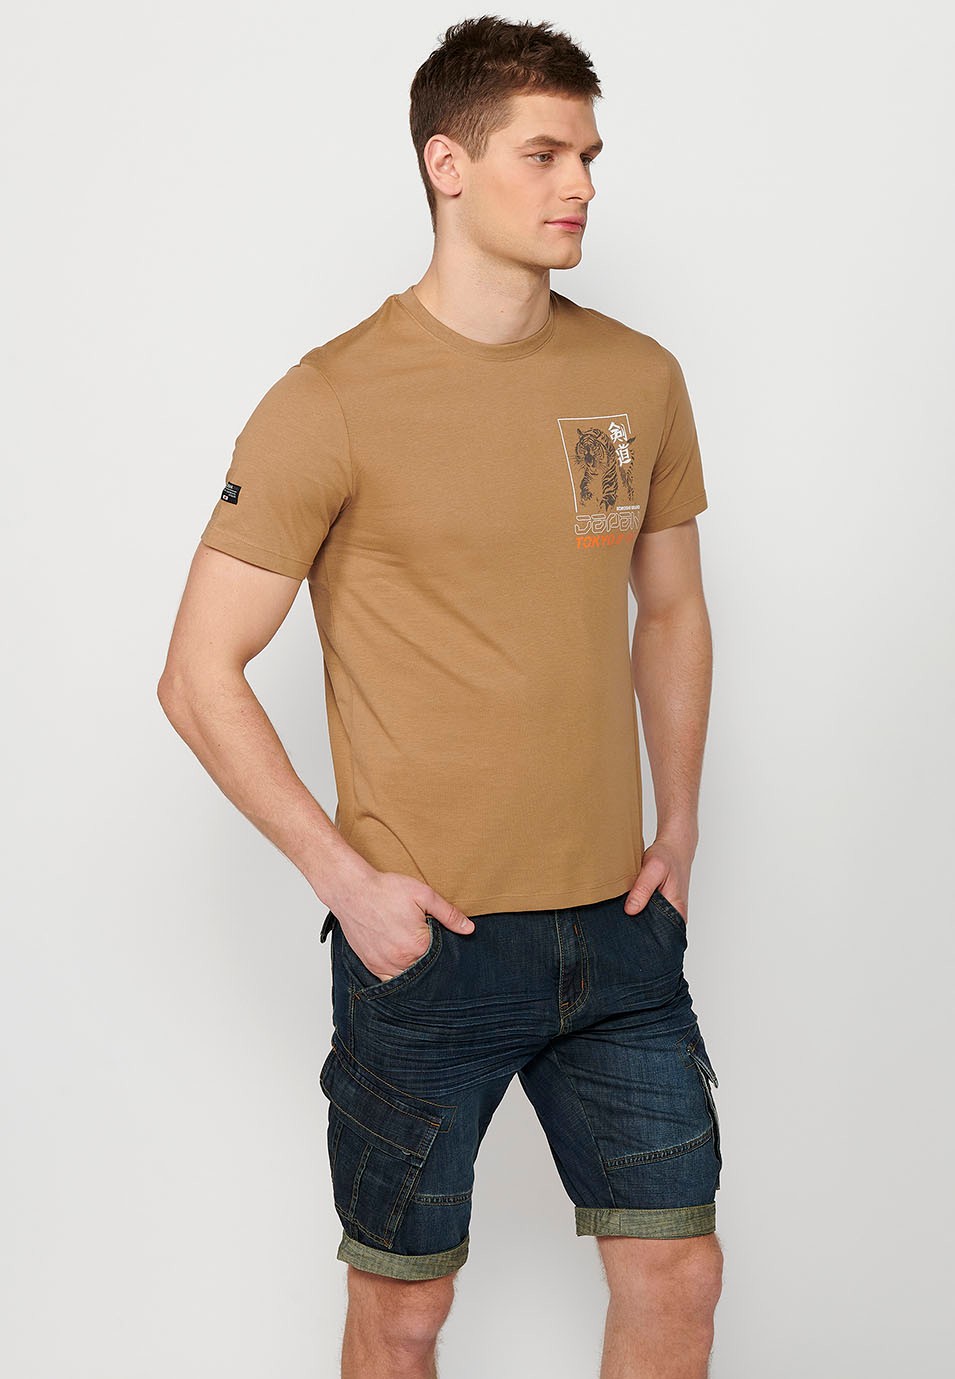 Short-sleeved cotton t-shirt with jungle tigger back print, camel color for men